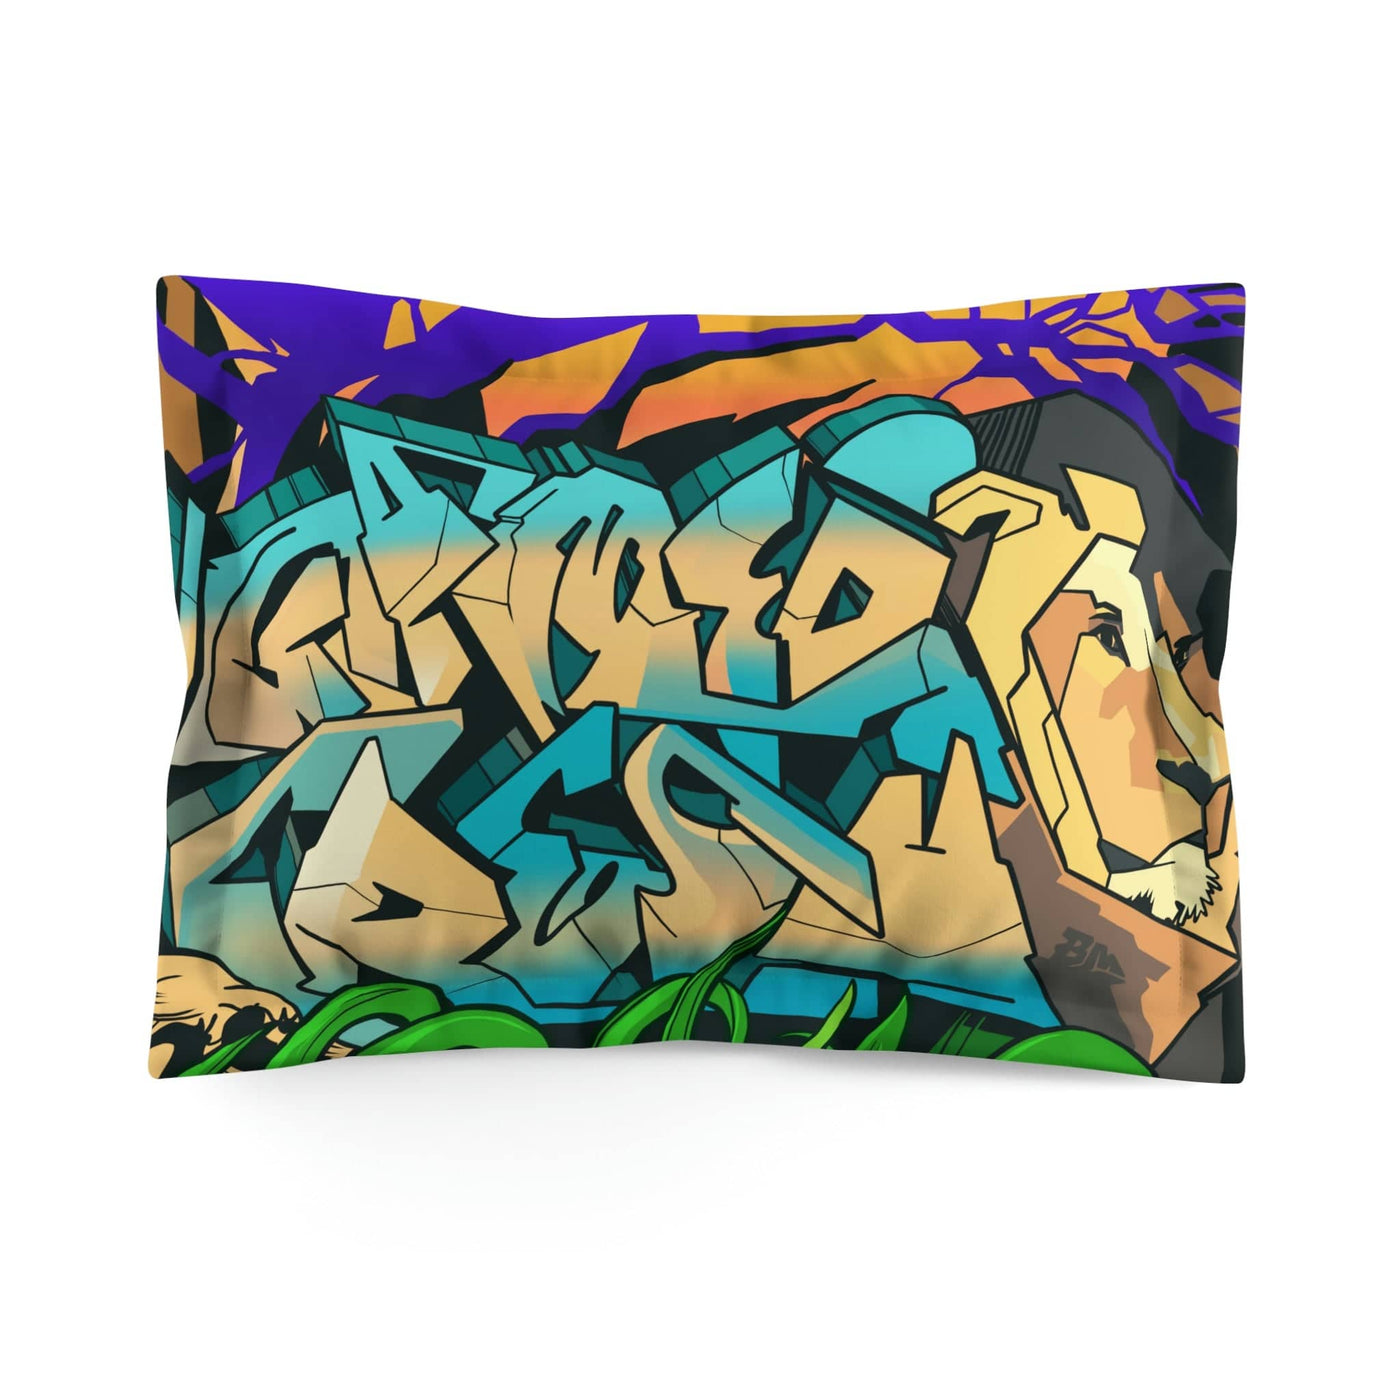 Gamer Fresh Graffiti NYC Lion Mural | Microfiber Light Brown Pillow Sham